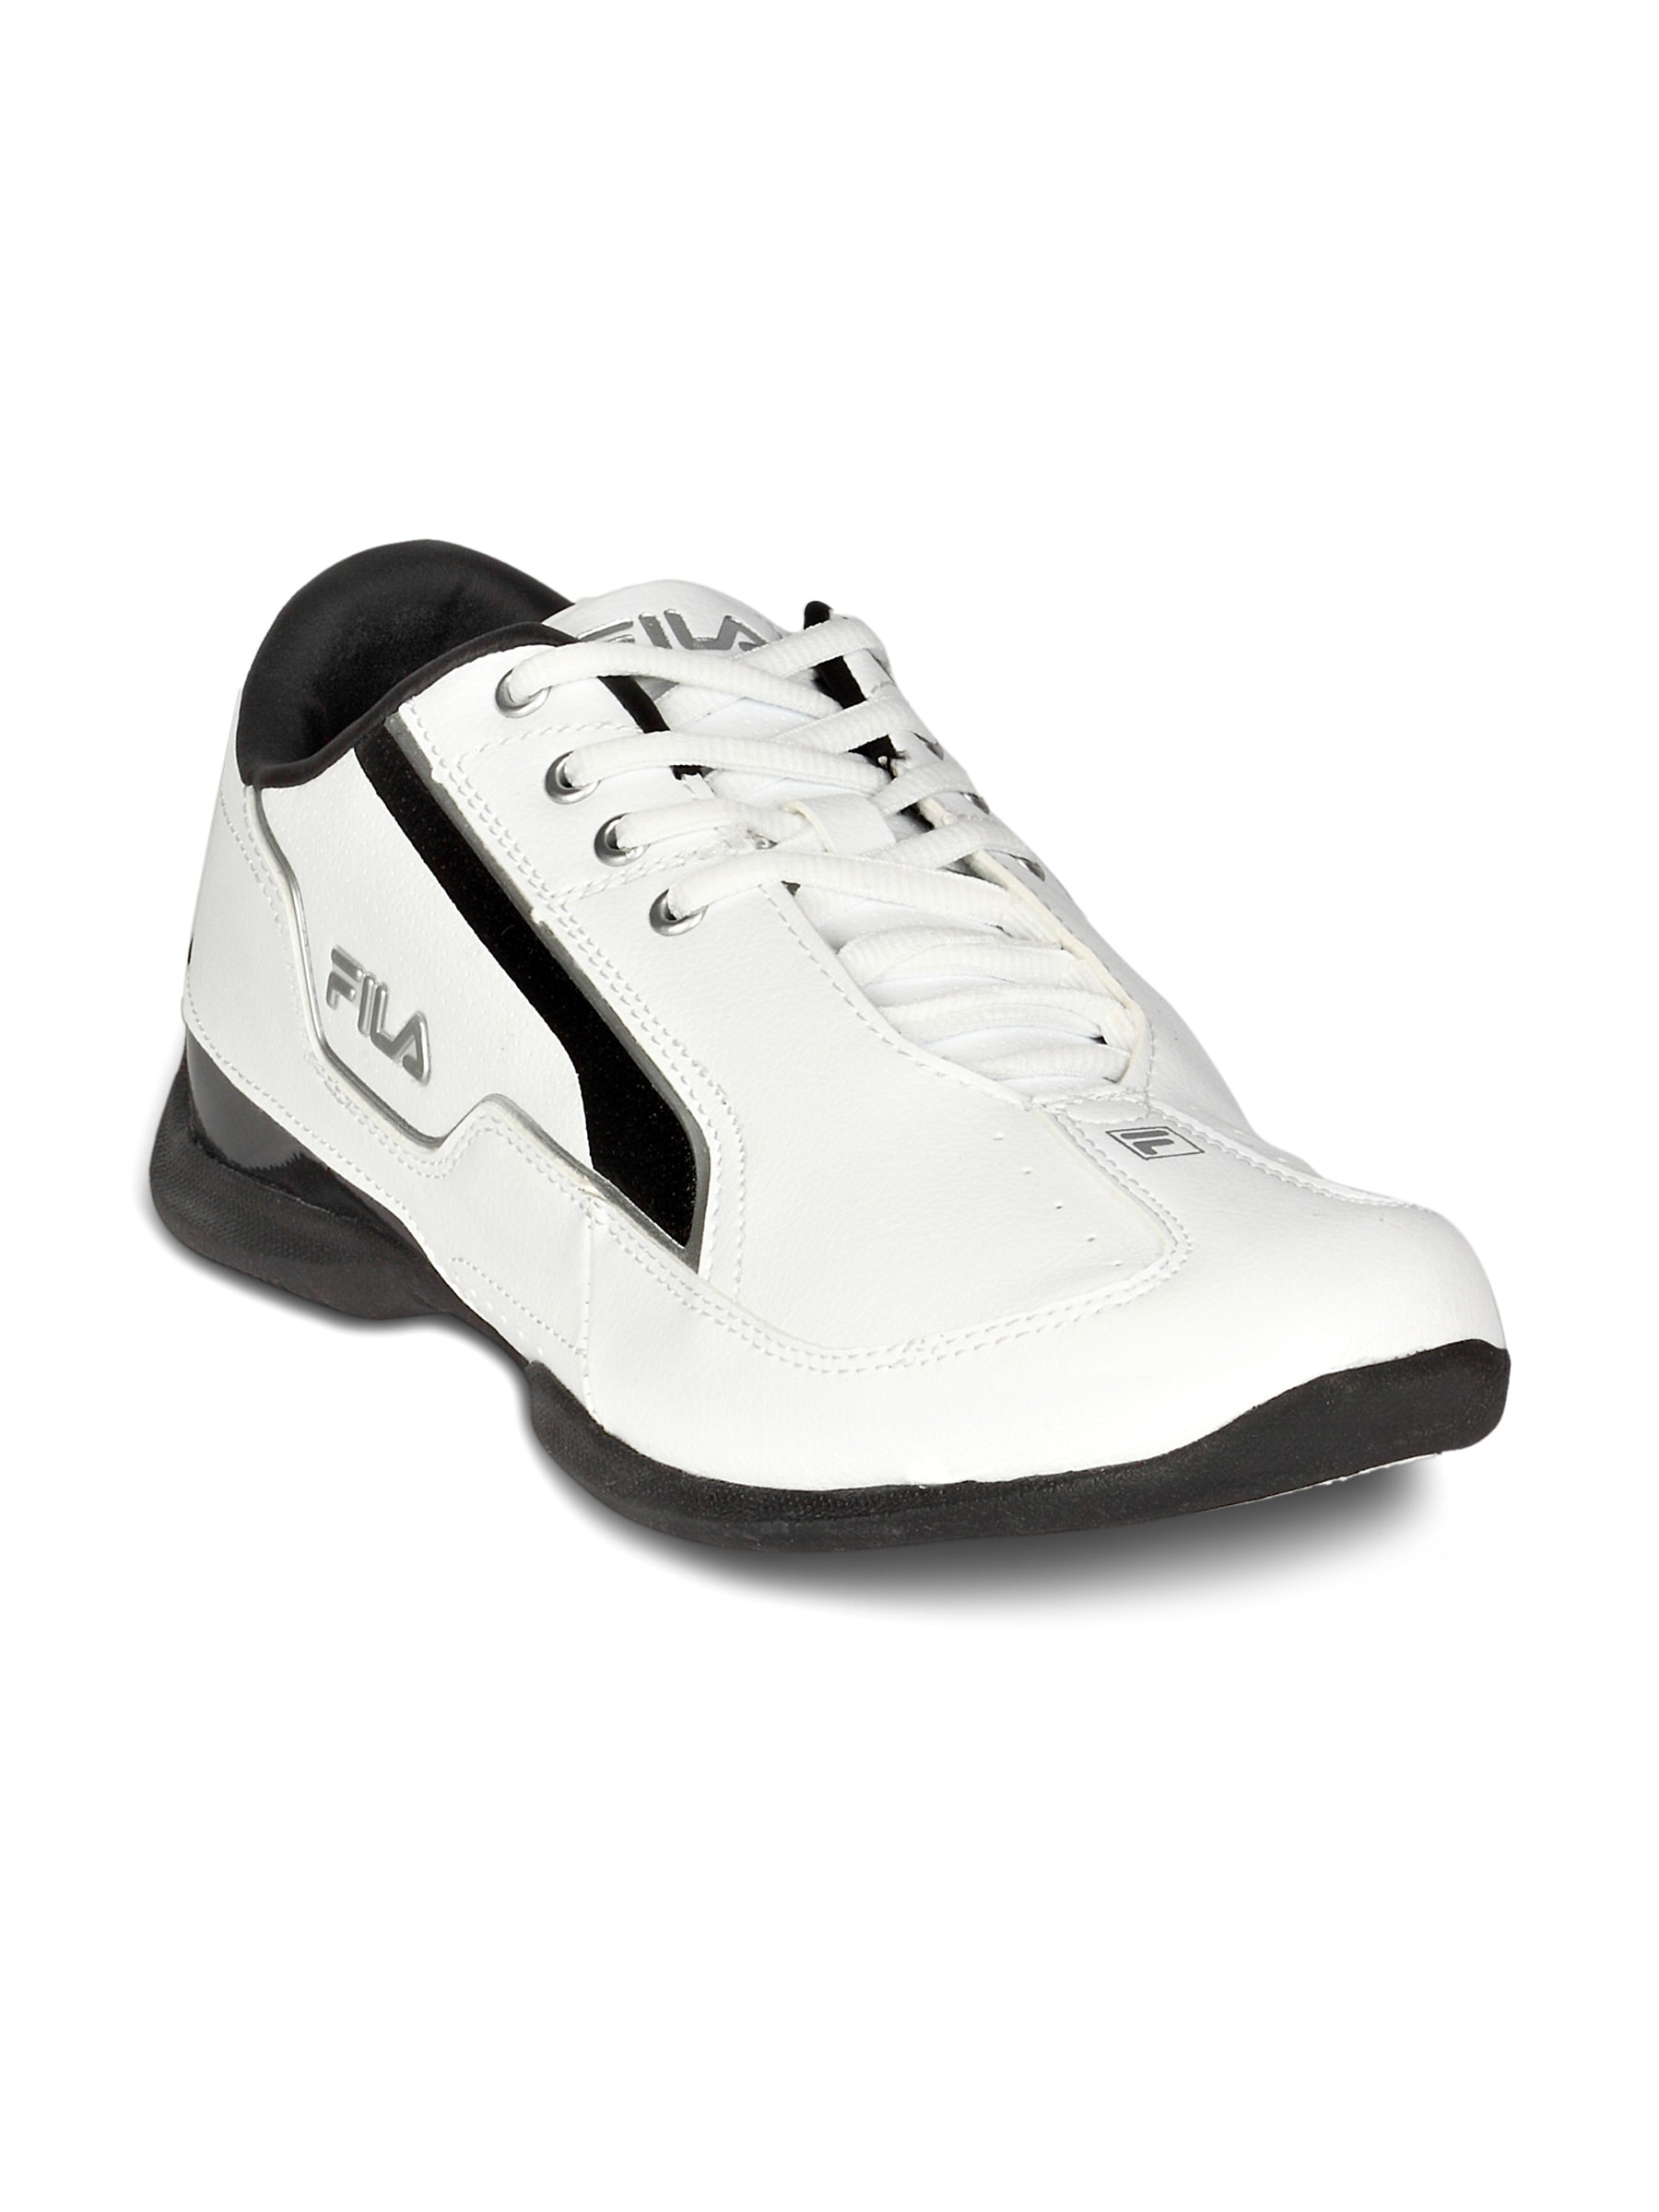 Fila Men's Leonard White Black Shoe